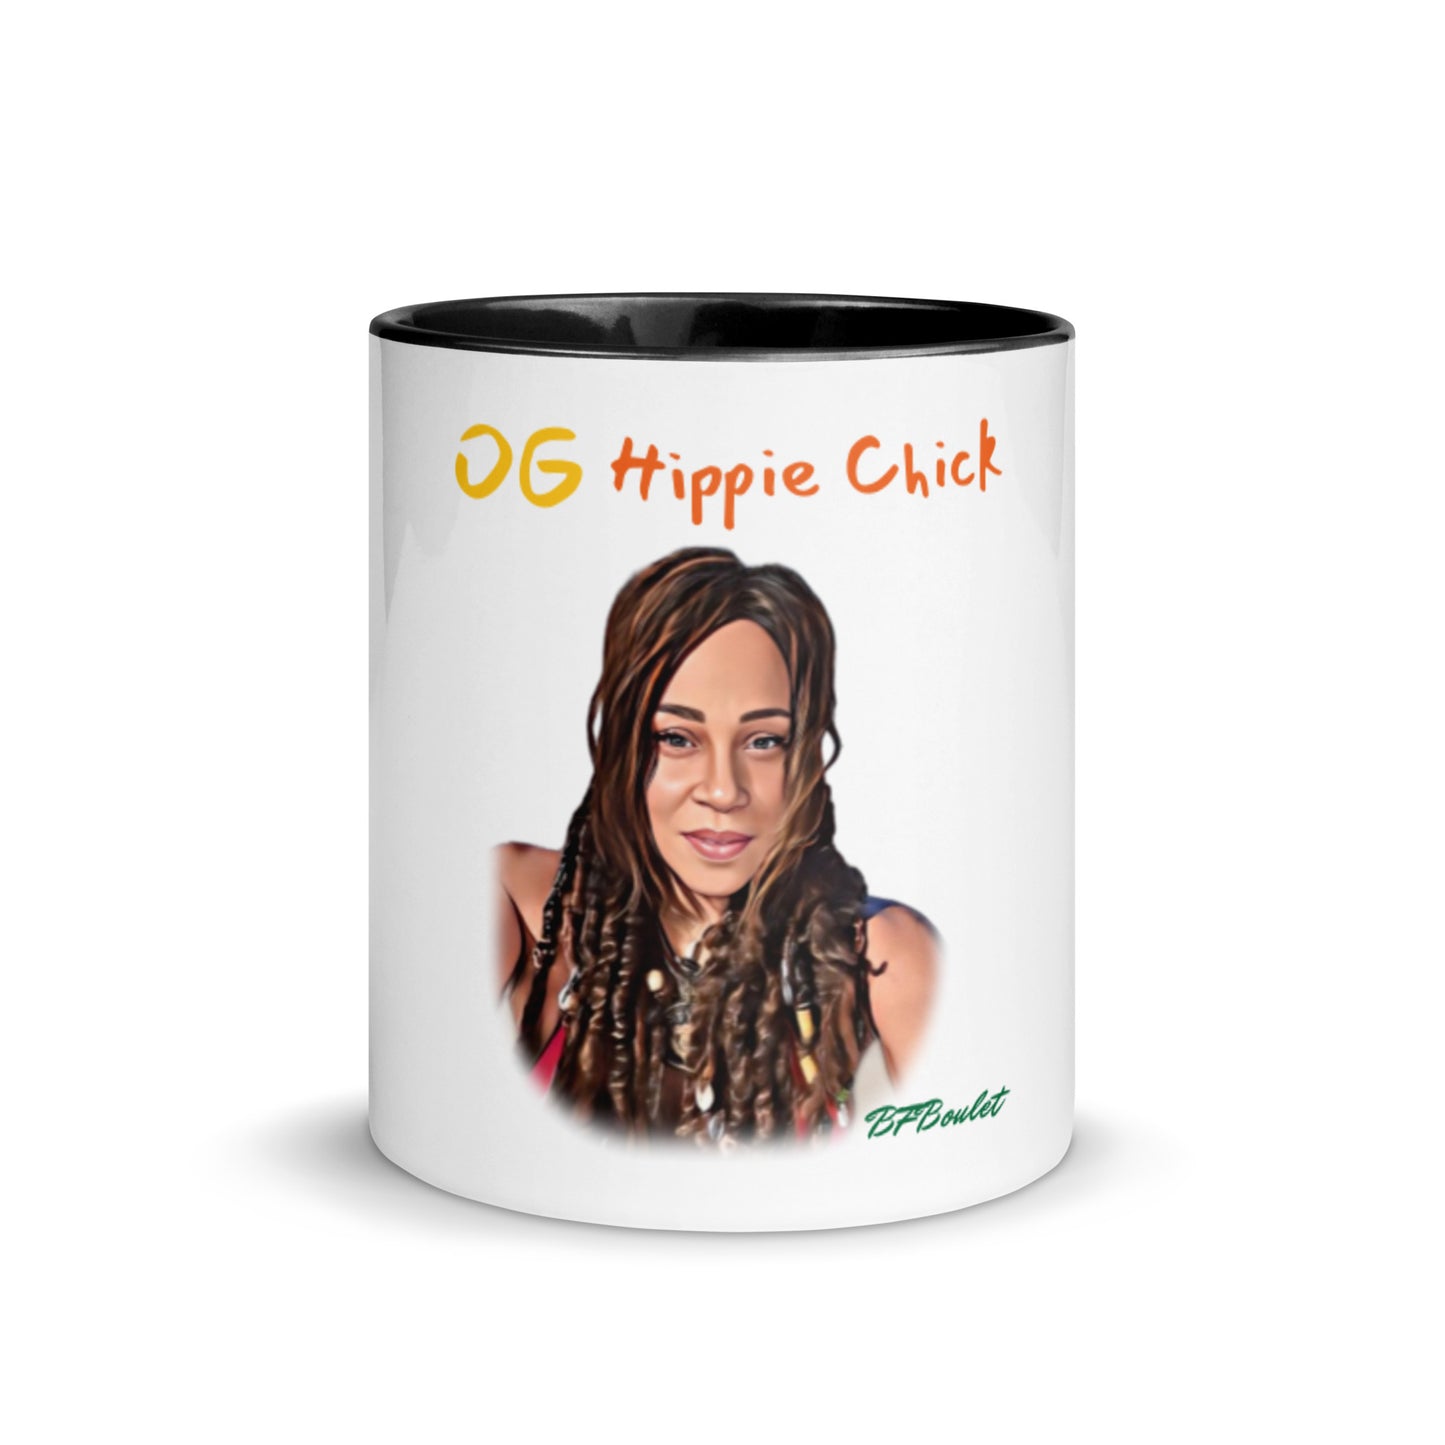 White Color Mug - OG Hippie Chick (BFBoulet)